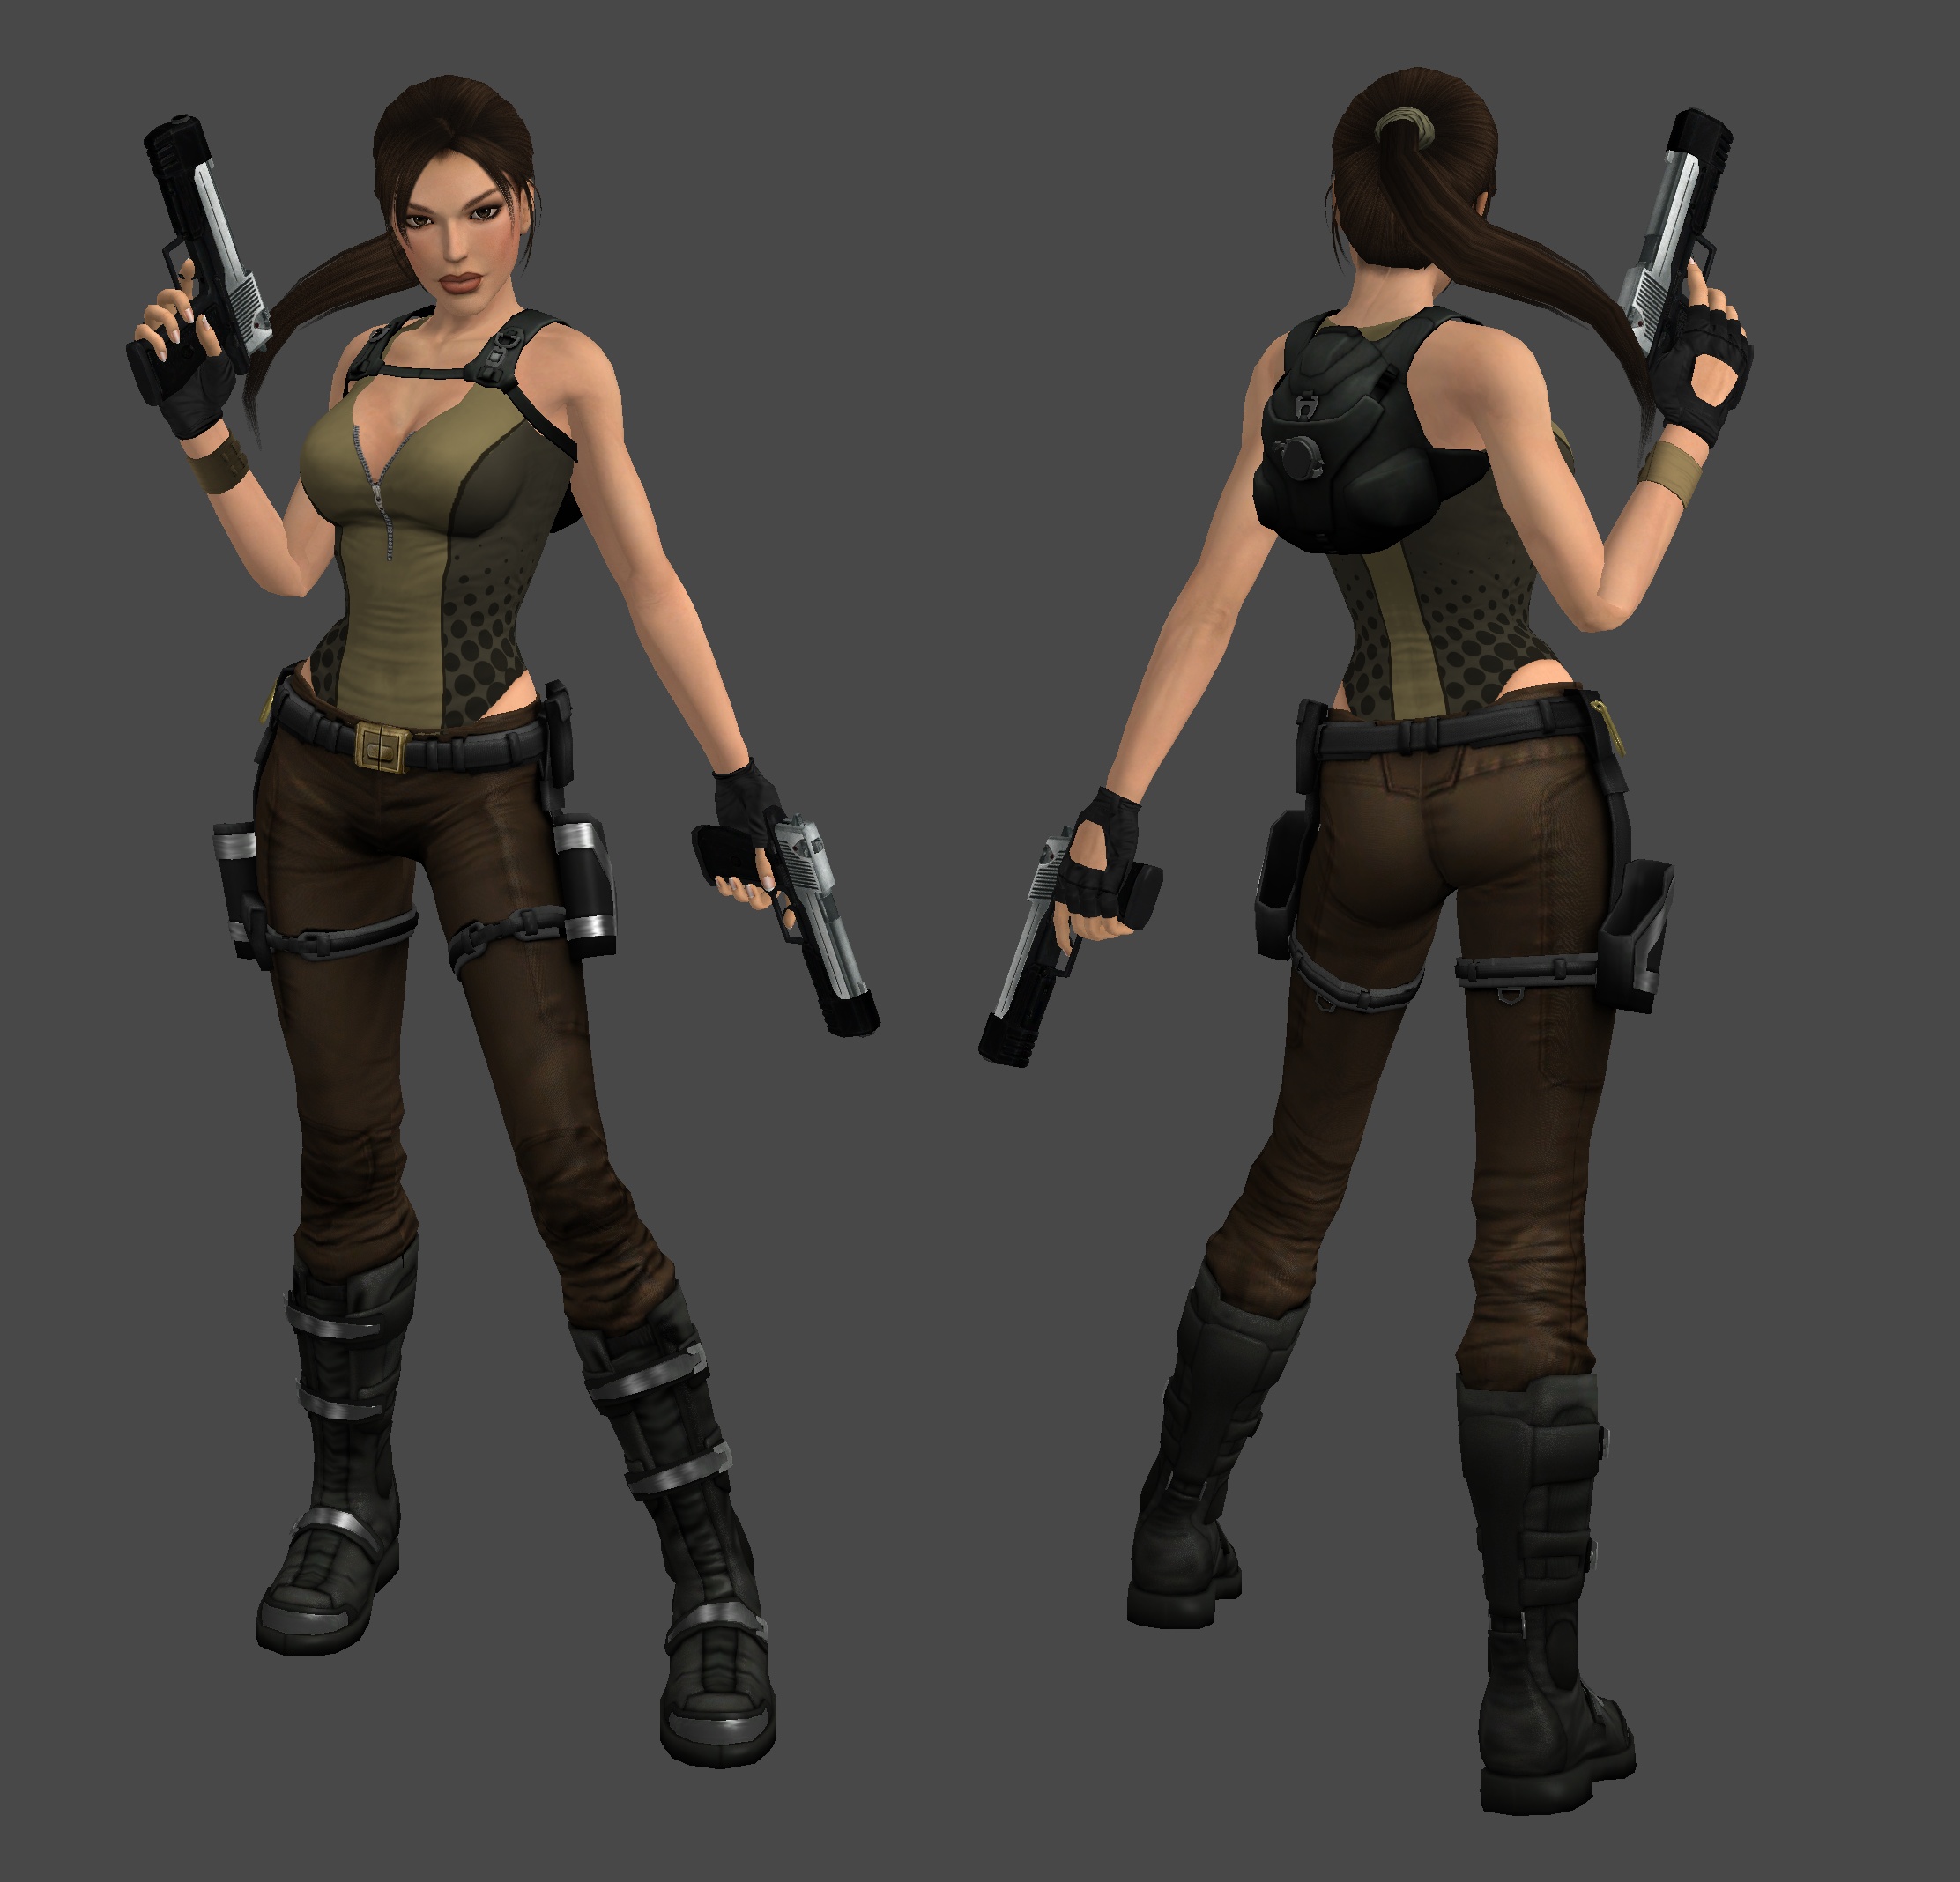 Lara Croft jungle pants outfit by spyros12.